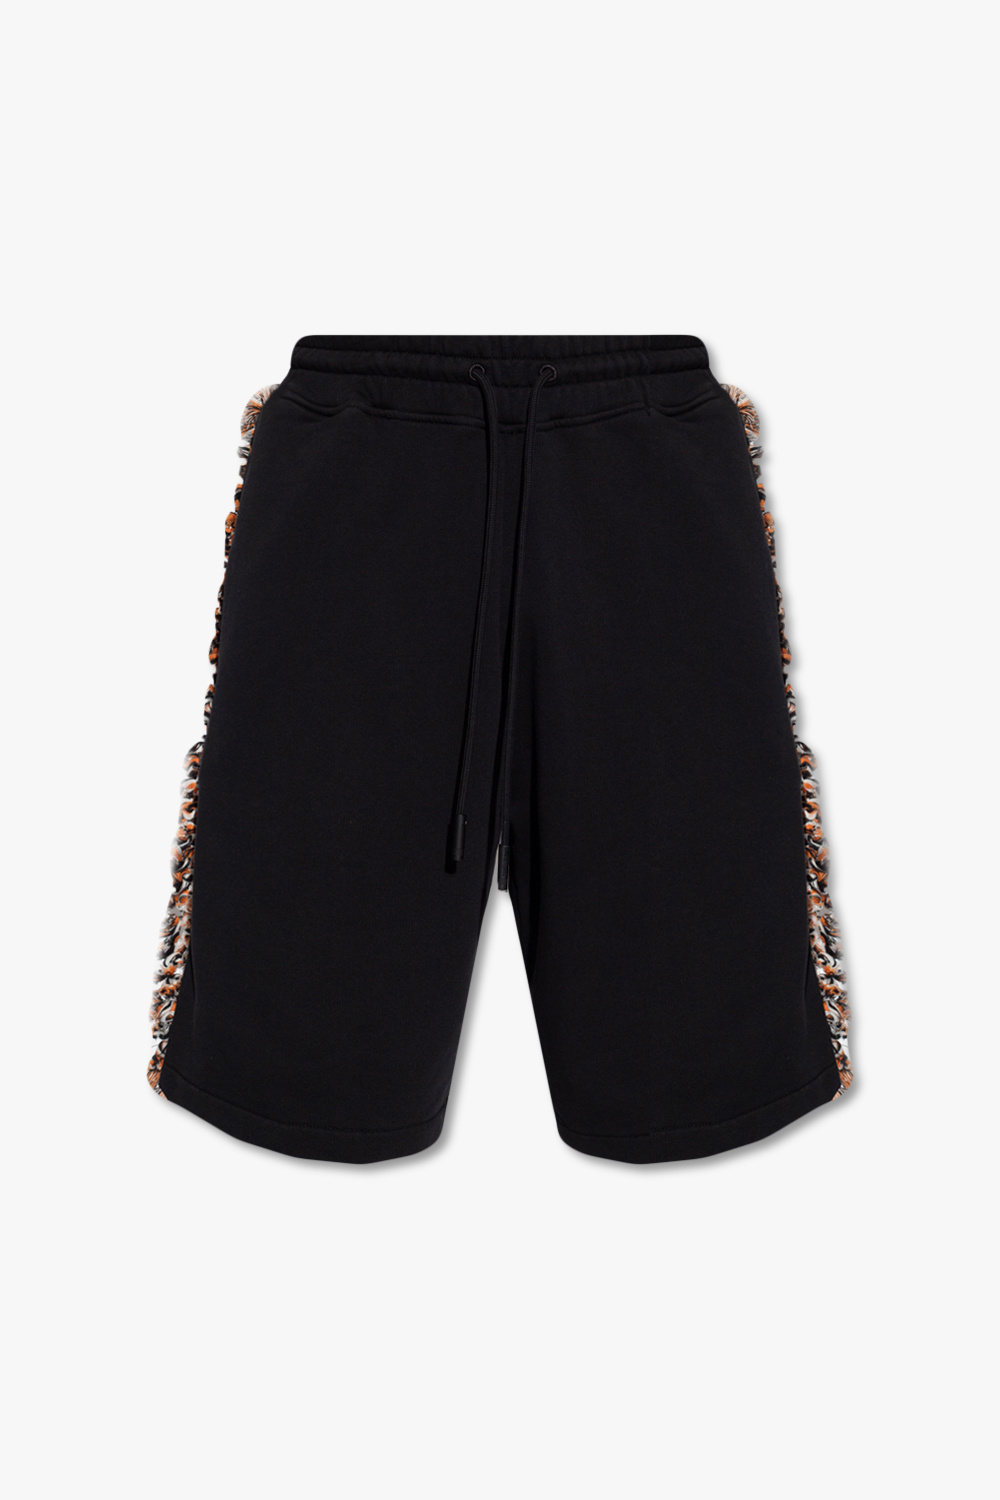 Marcelo Burlon Embellished shorts